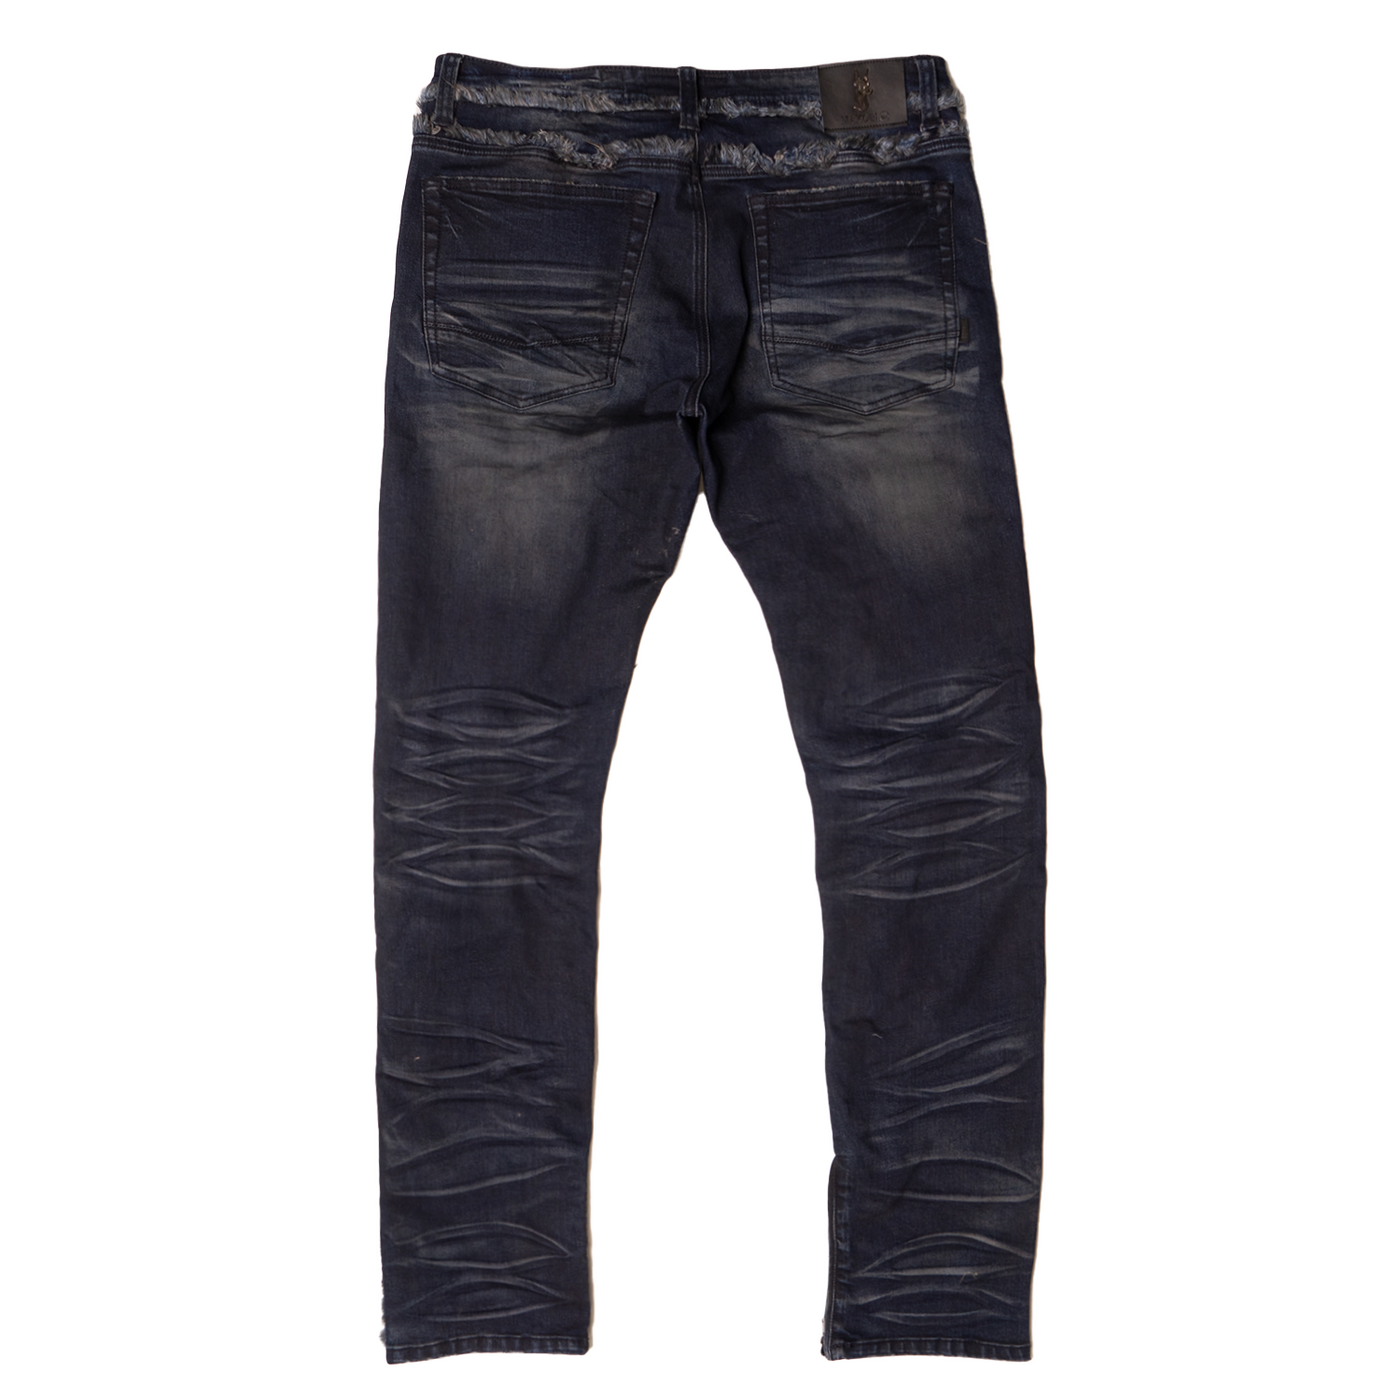 M1973 Danielli 34" Semi Stacked Jeans - Vintage